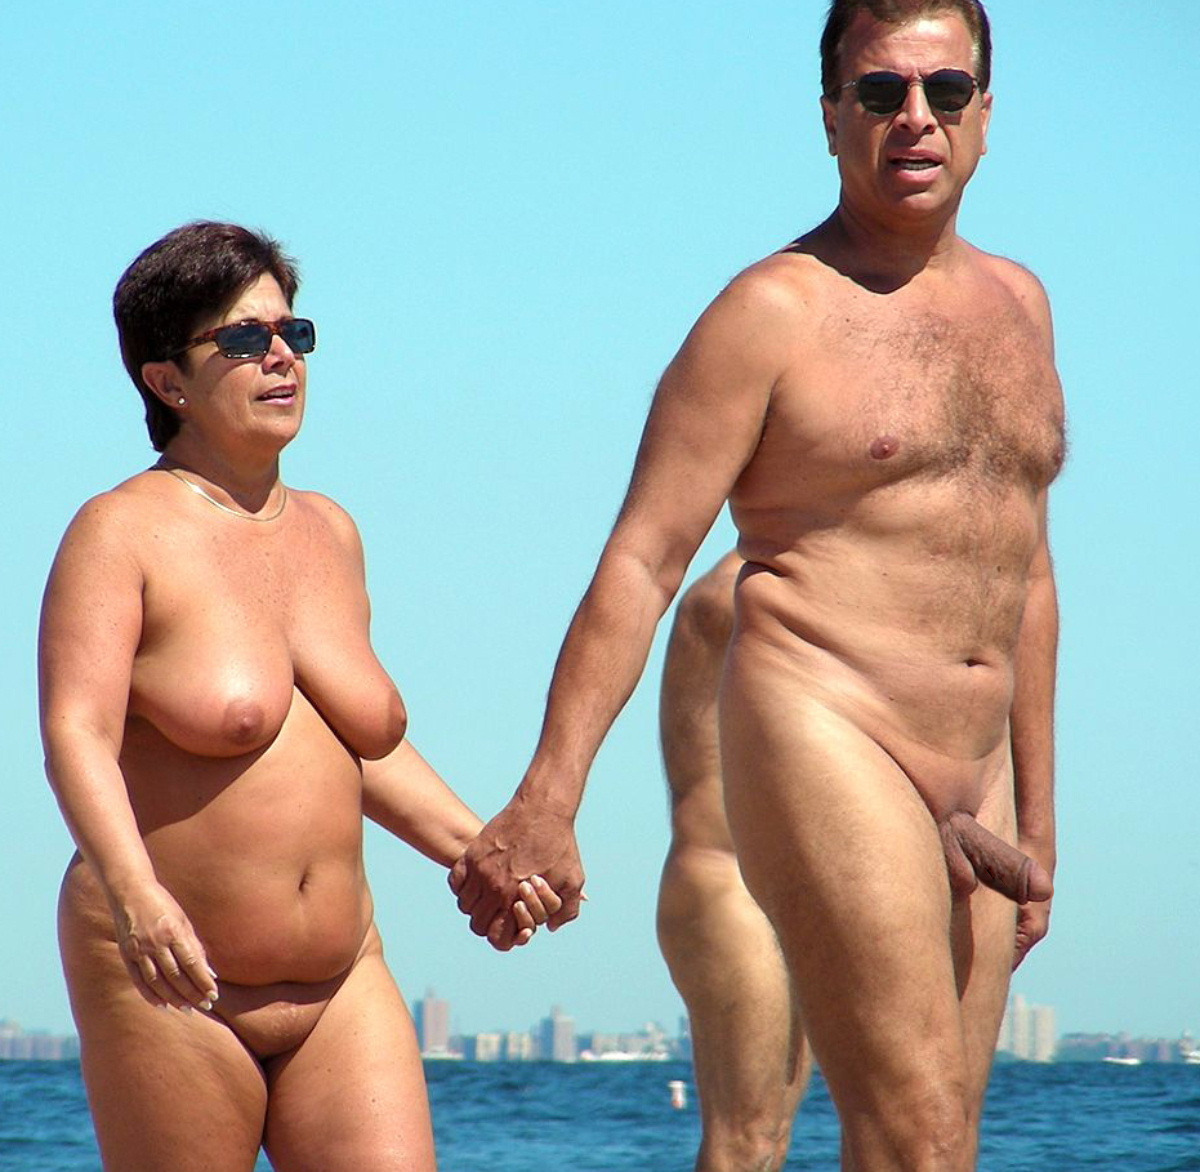 Nudist beach couple erections